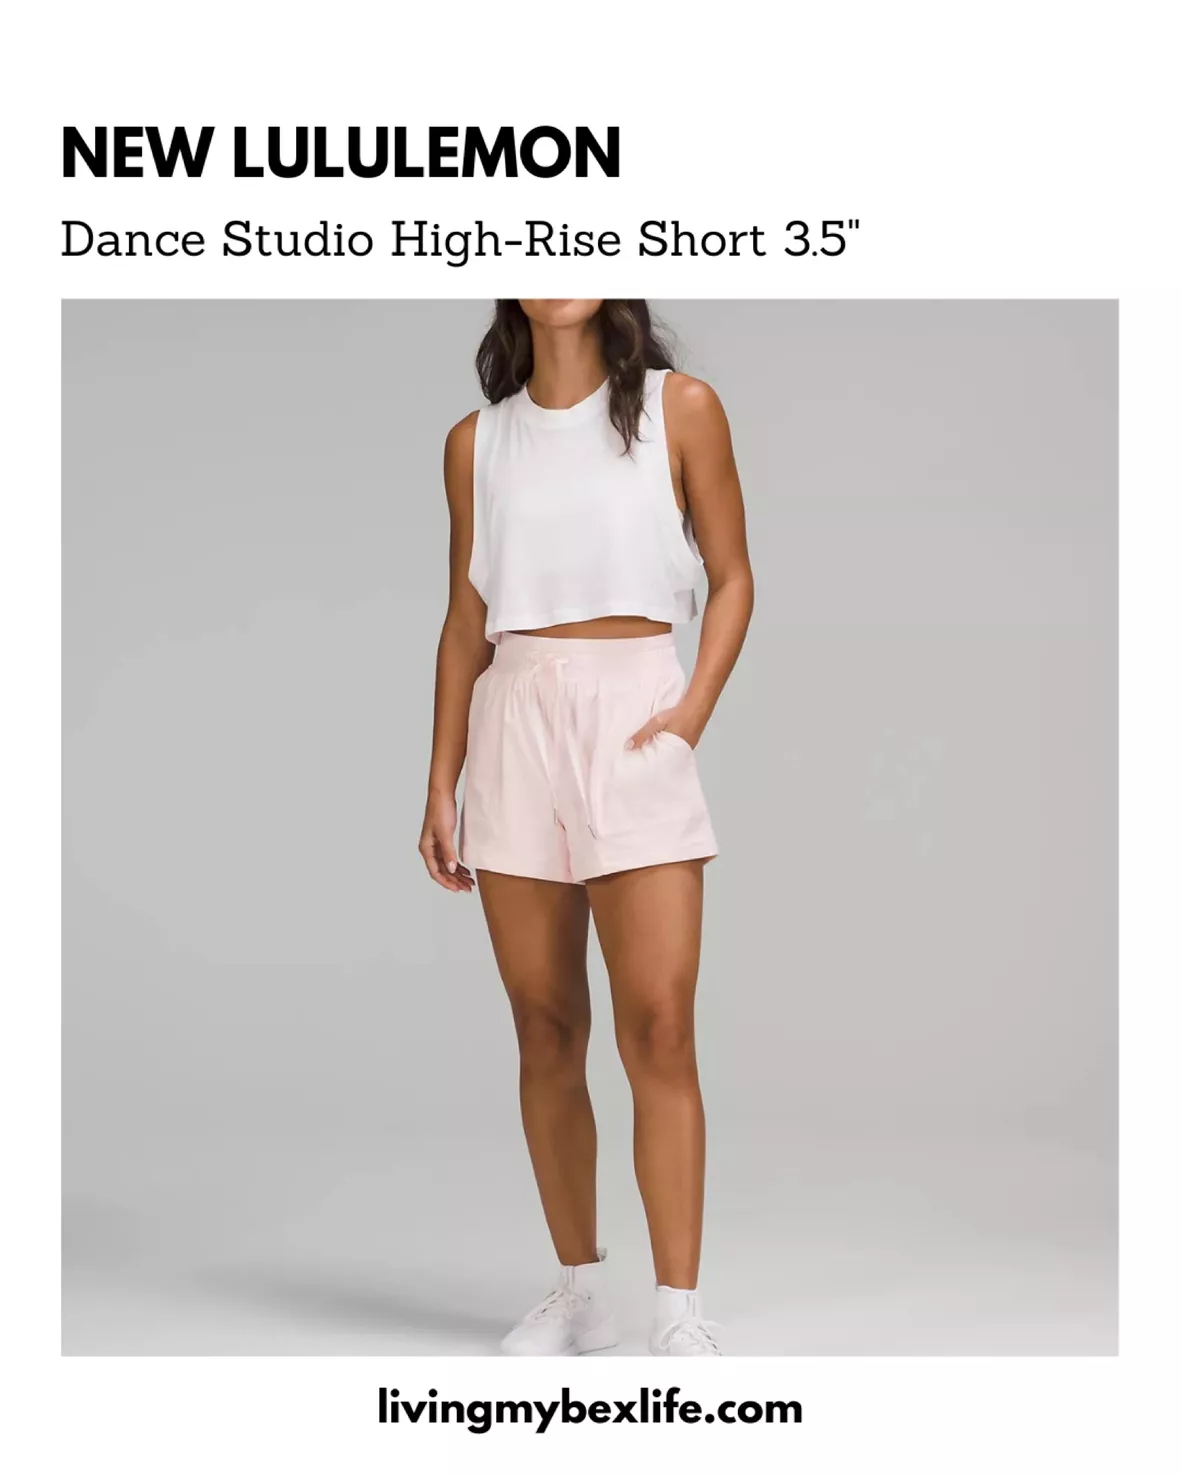 Lululemon athletica Dance Studio High-Rise Short 3.5, Women's Shorts